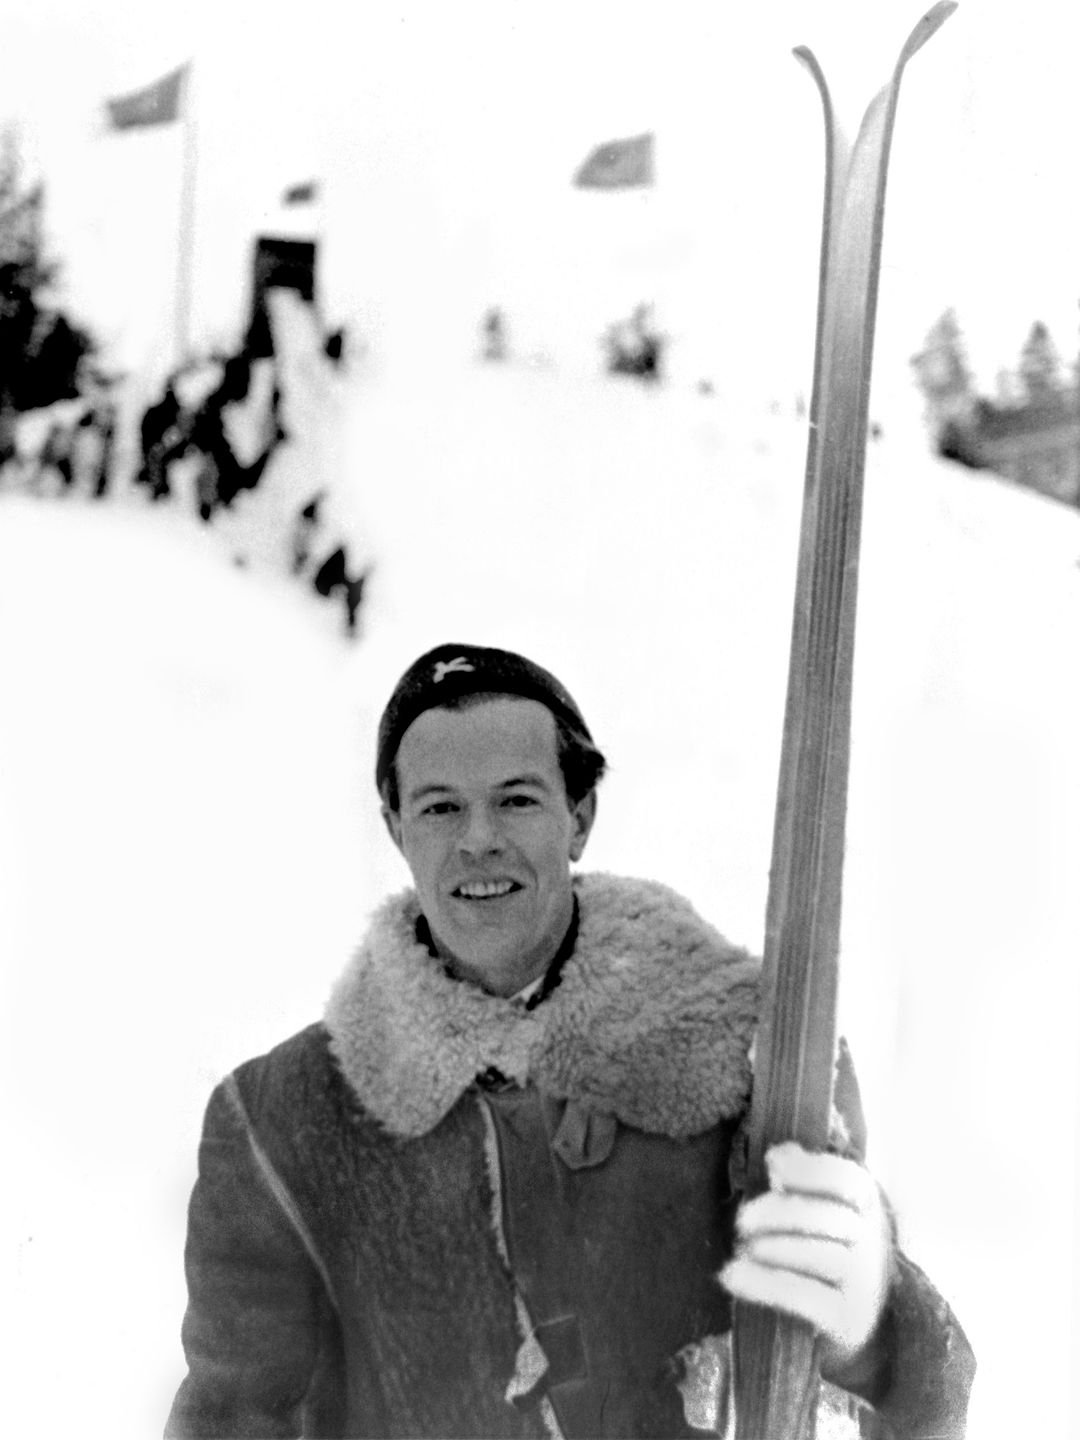 Norwegian ski jumper Asbjörn Ruud at the 1946 Winter Games 